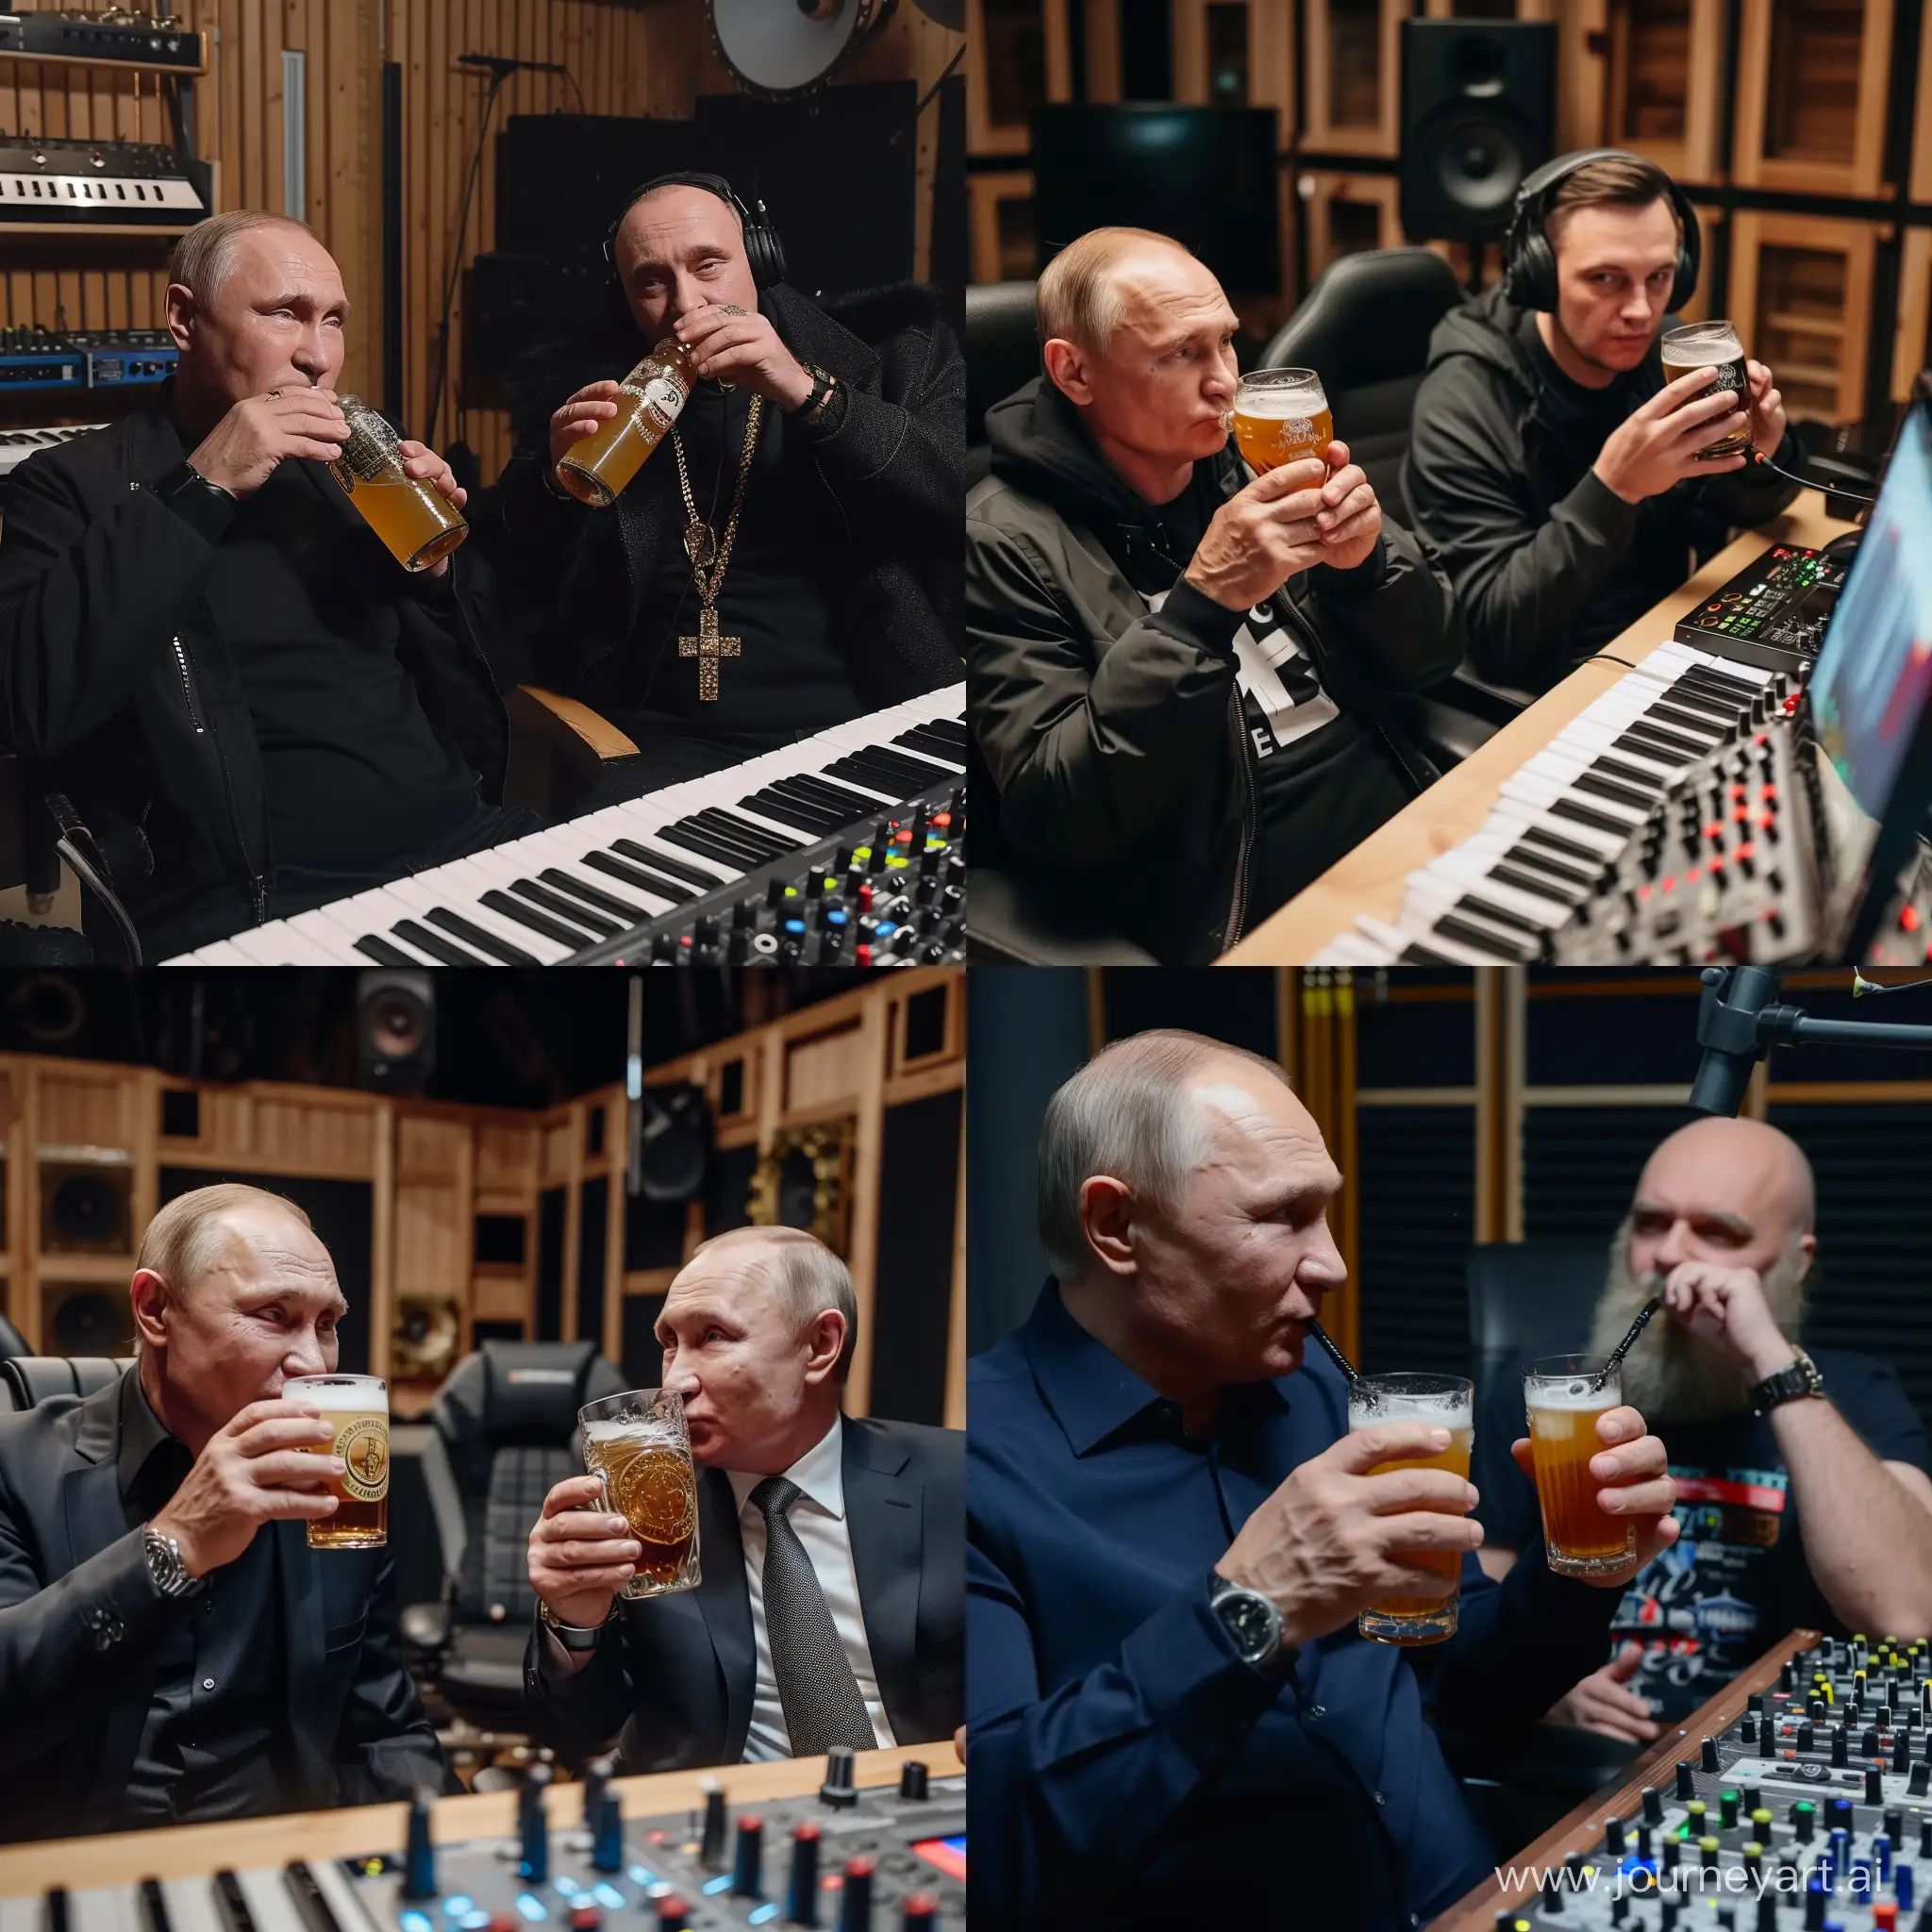 Vladimir Putin and Og buda drink lean at a music studio